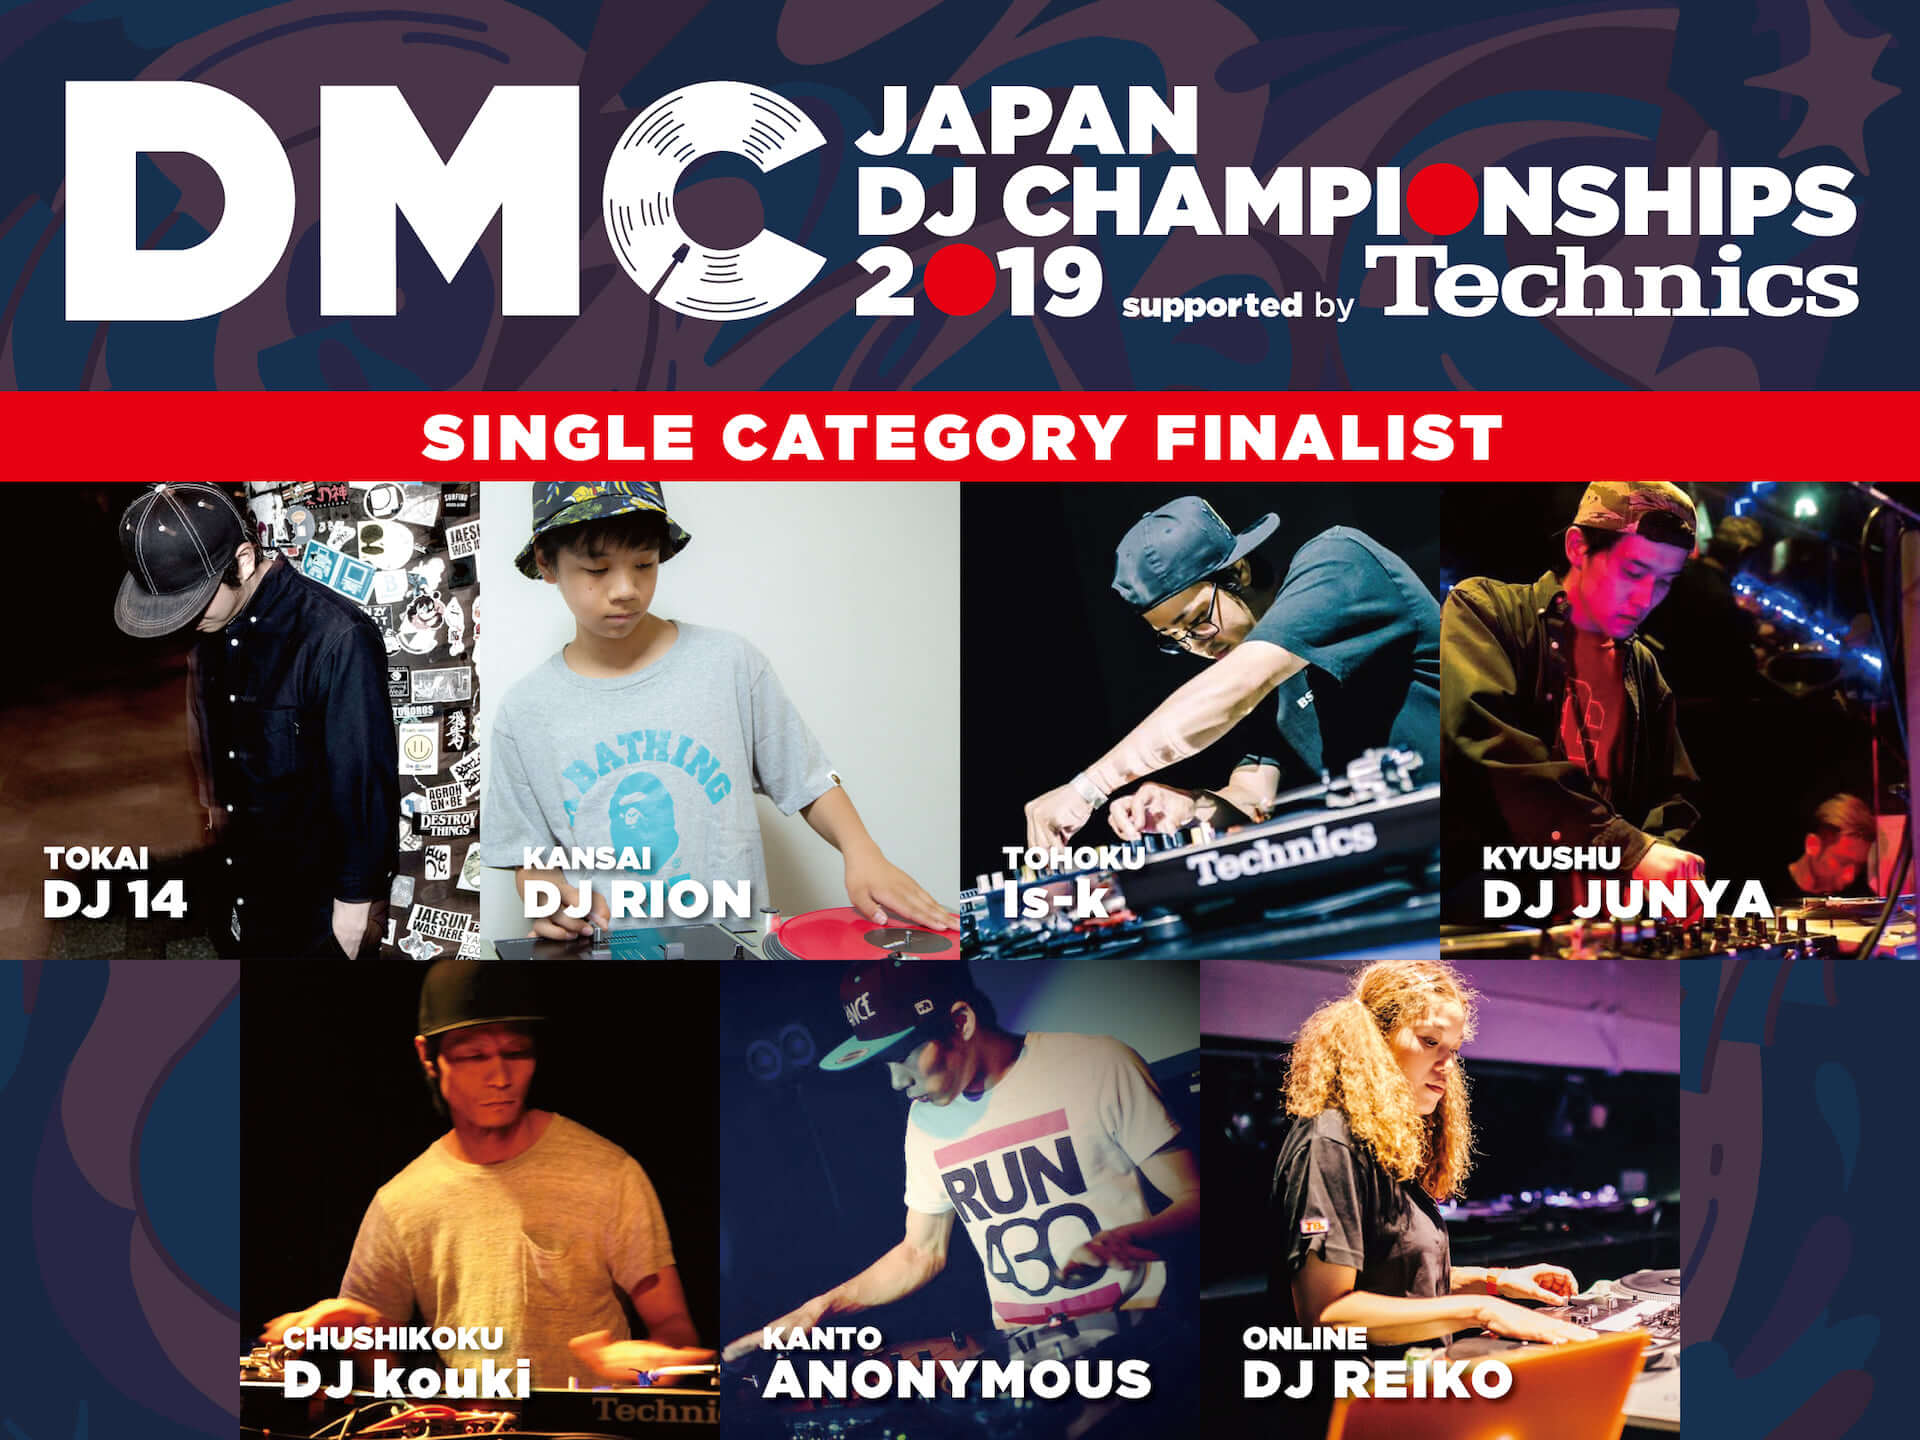 DJ日本一をかけた＜DMC JAPAN FINAL＞のファイナリストが決定｜特別パフォーマンスや限定グッズ販売など大会の全容も公開 music190808_dmcjapan_14-1920x1440